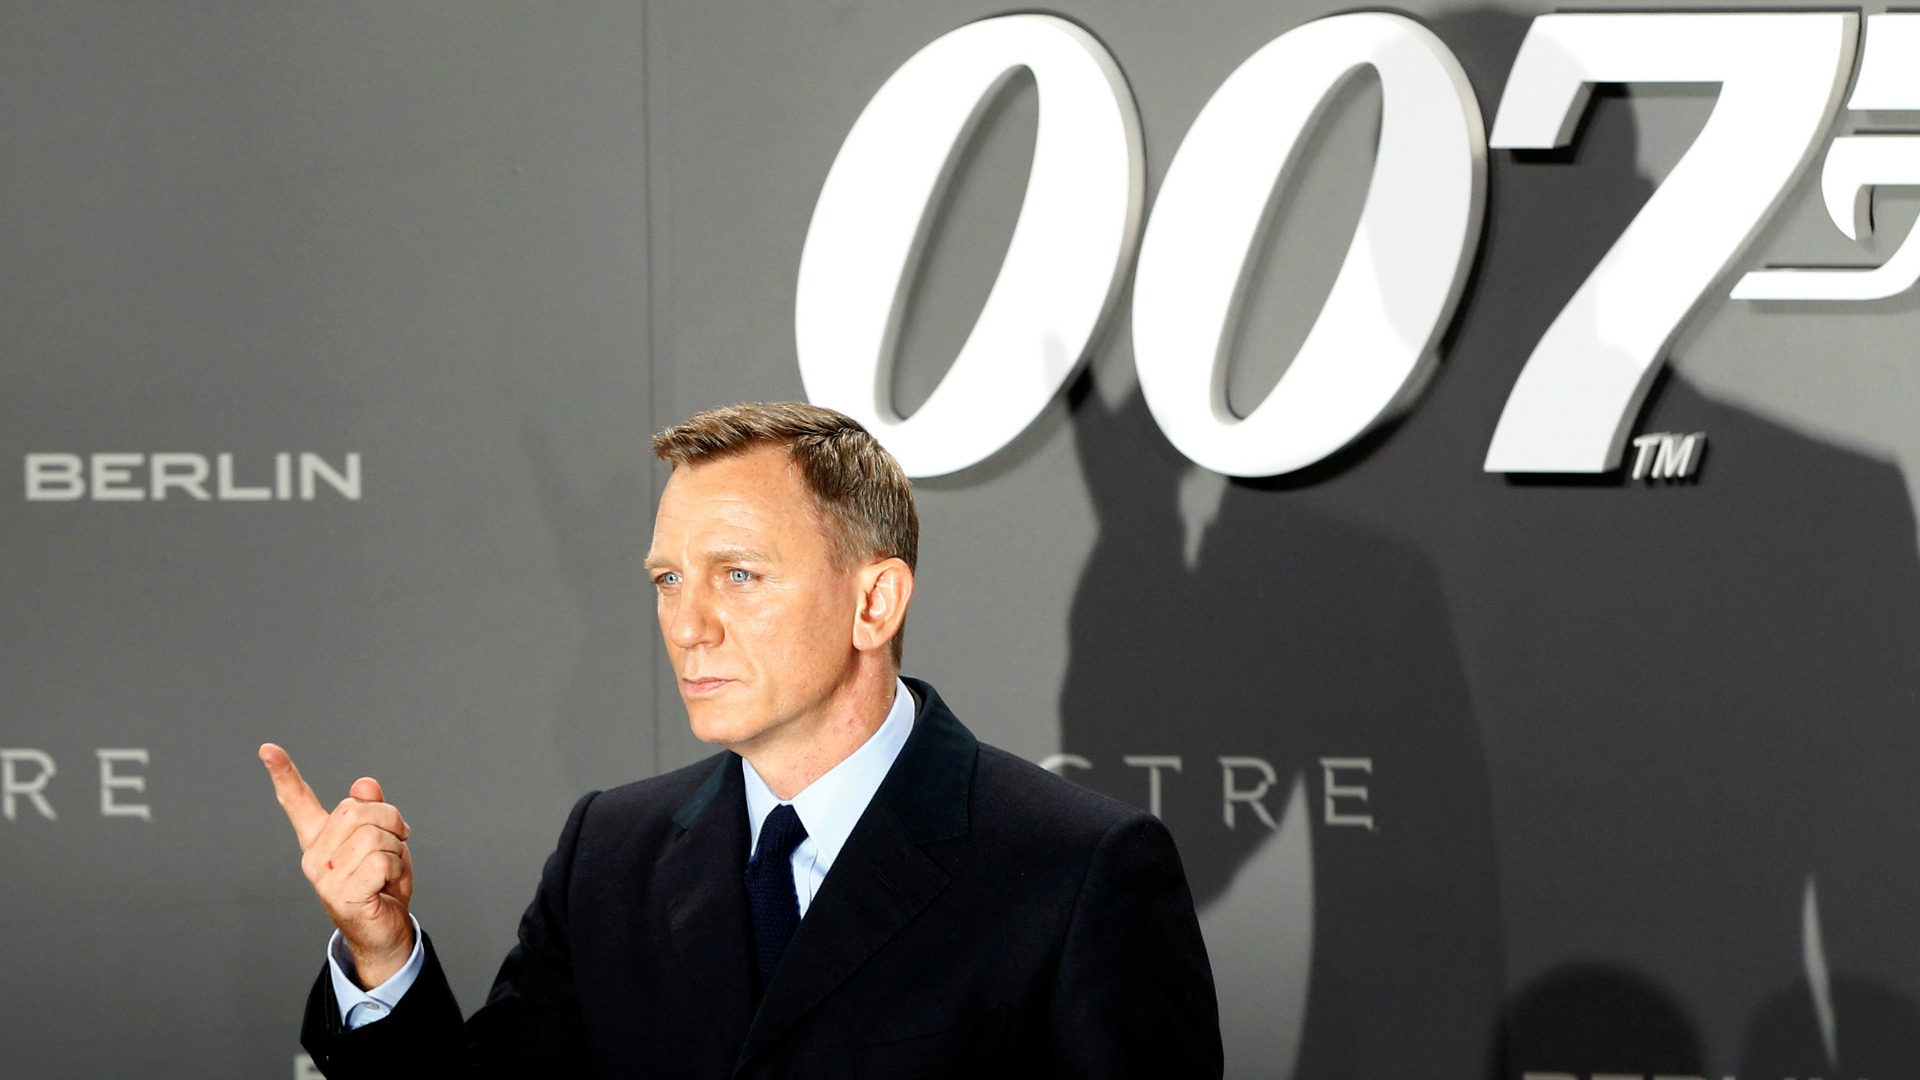 Daniel Craig confirma que volverá a interpretar a James Bond